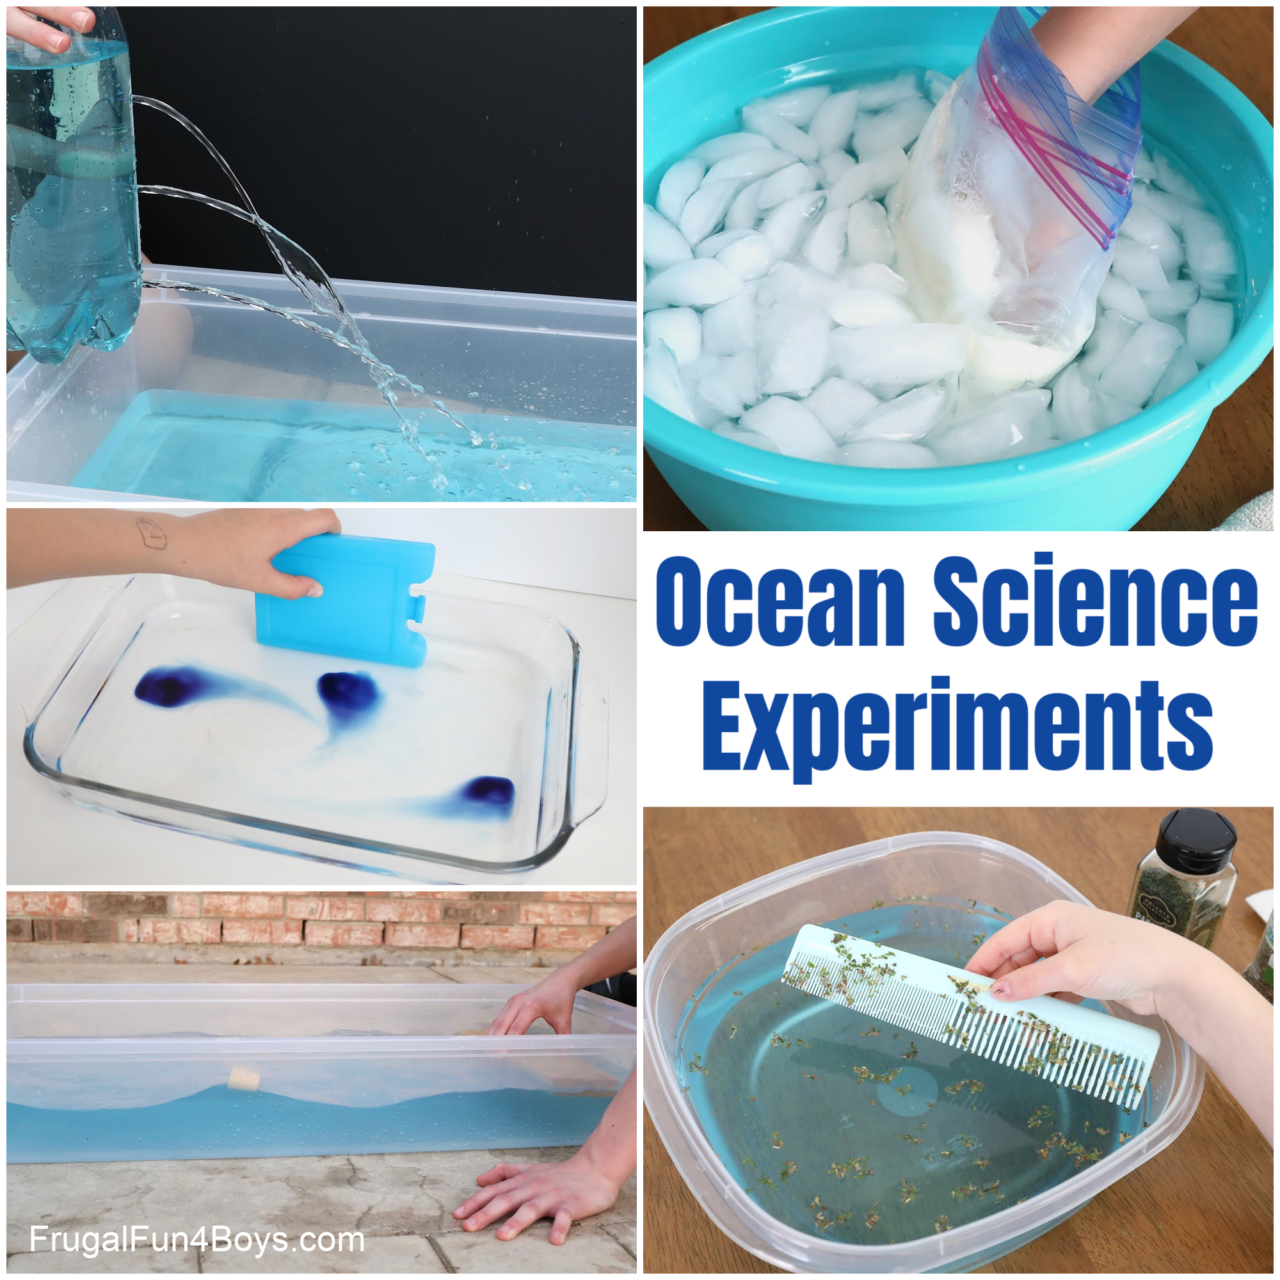 Marine-Science-FB-2-2-1280x1280-1 Ocean Science Experiments